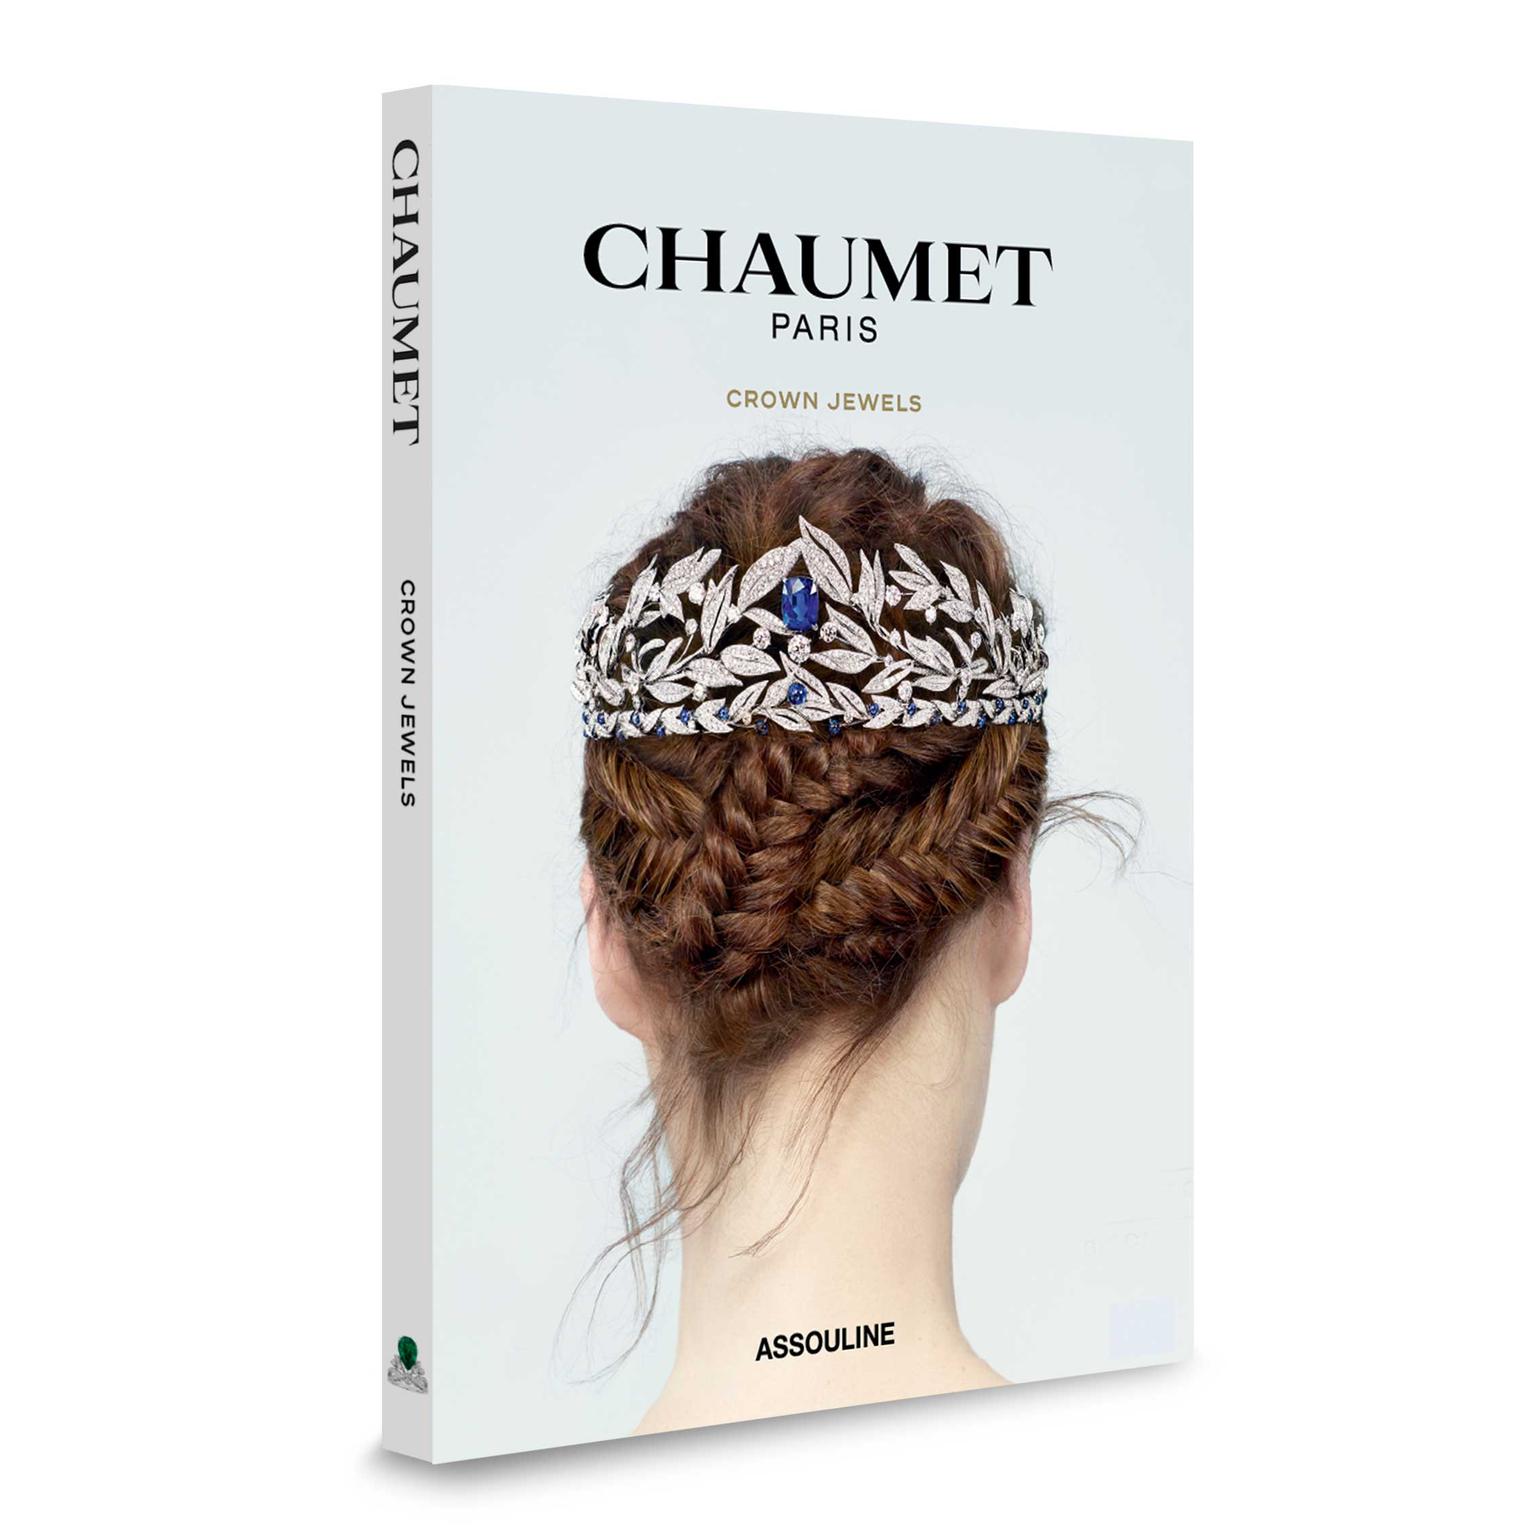 Chaumet Memoire Assouline book cover